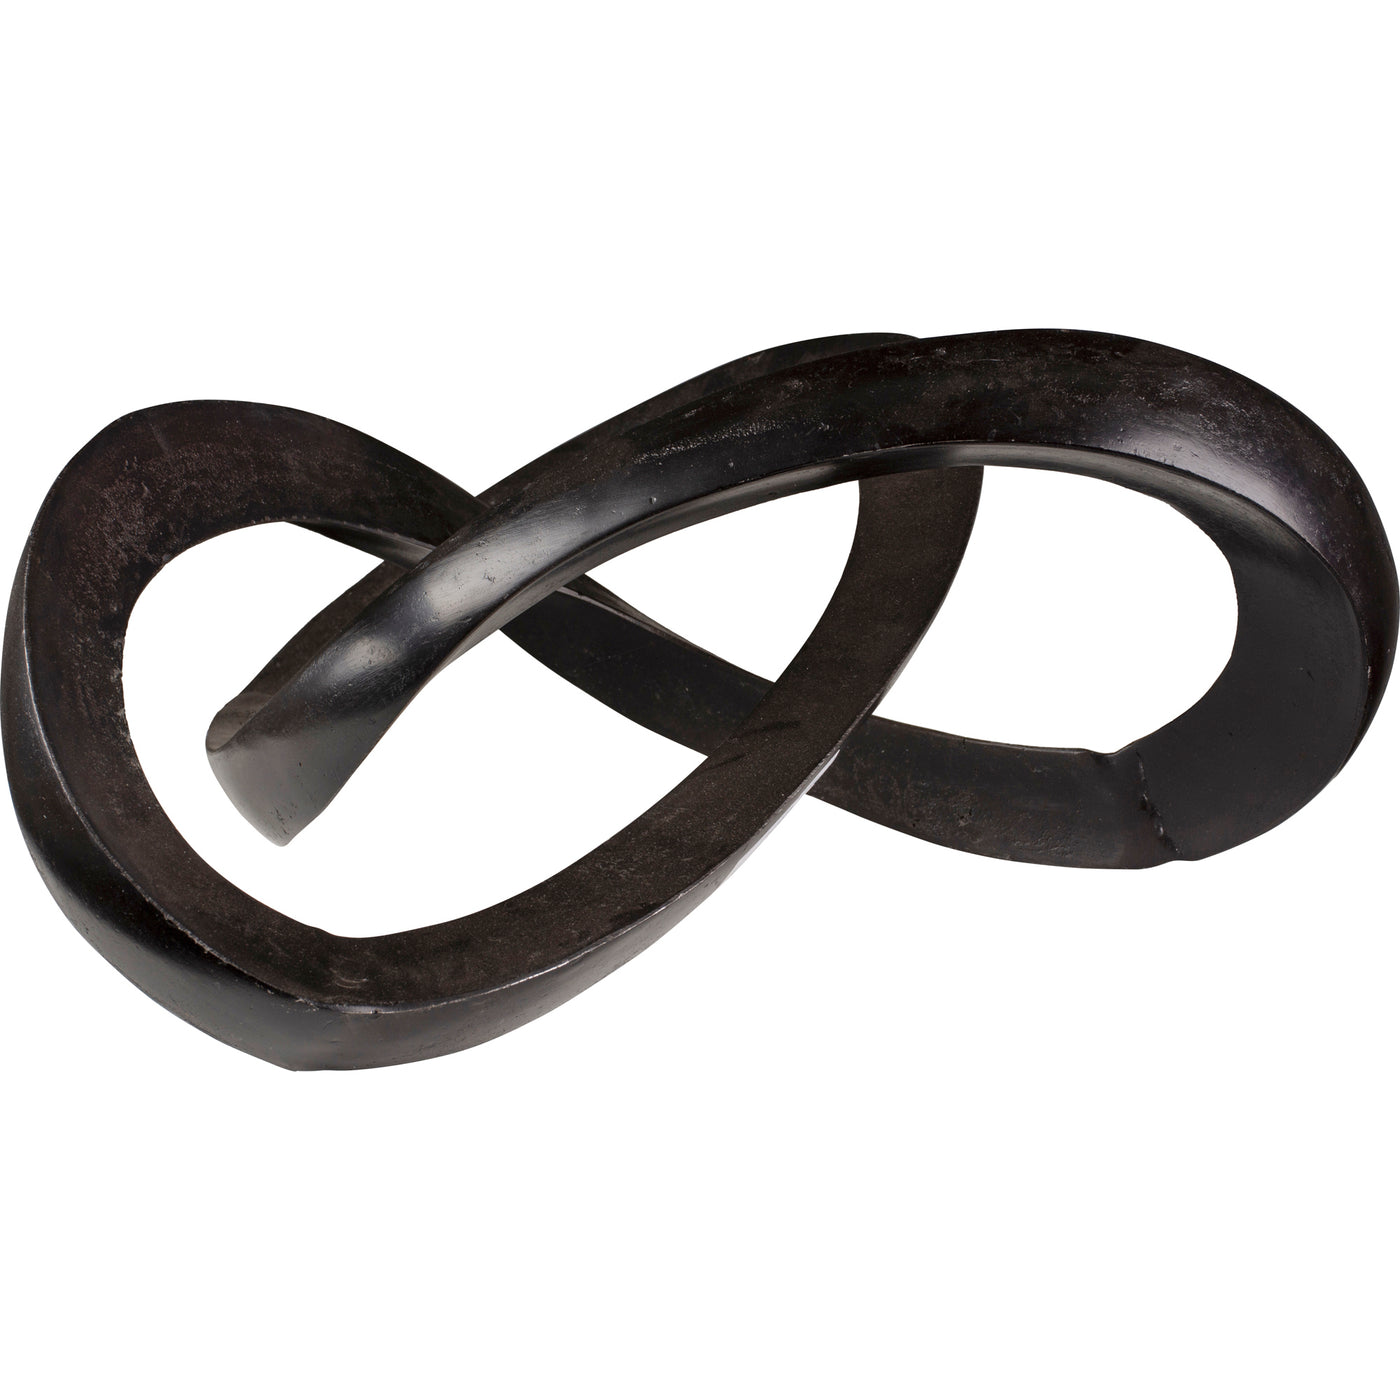 Infinity  Decor Object (Black)